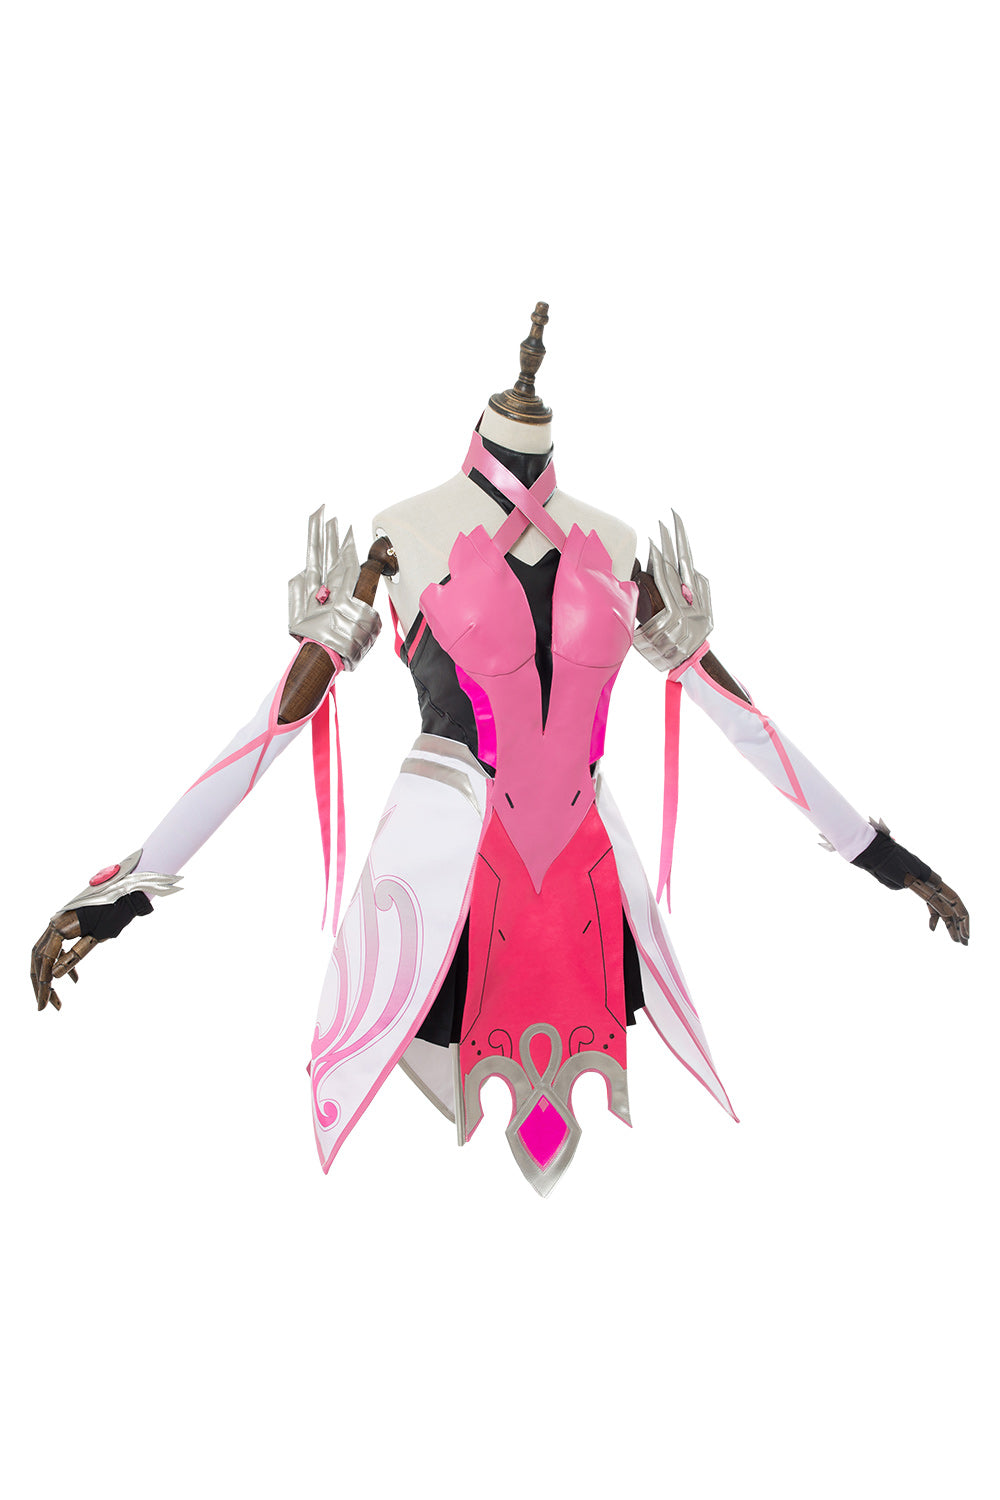 Overwatch Mercy Angela Ziegler Cosplay Kostüm Kleid Rosa Set